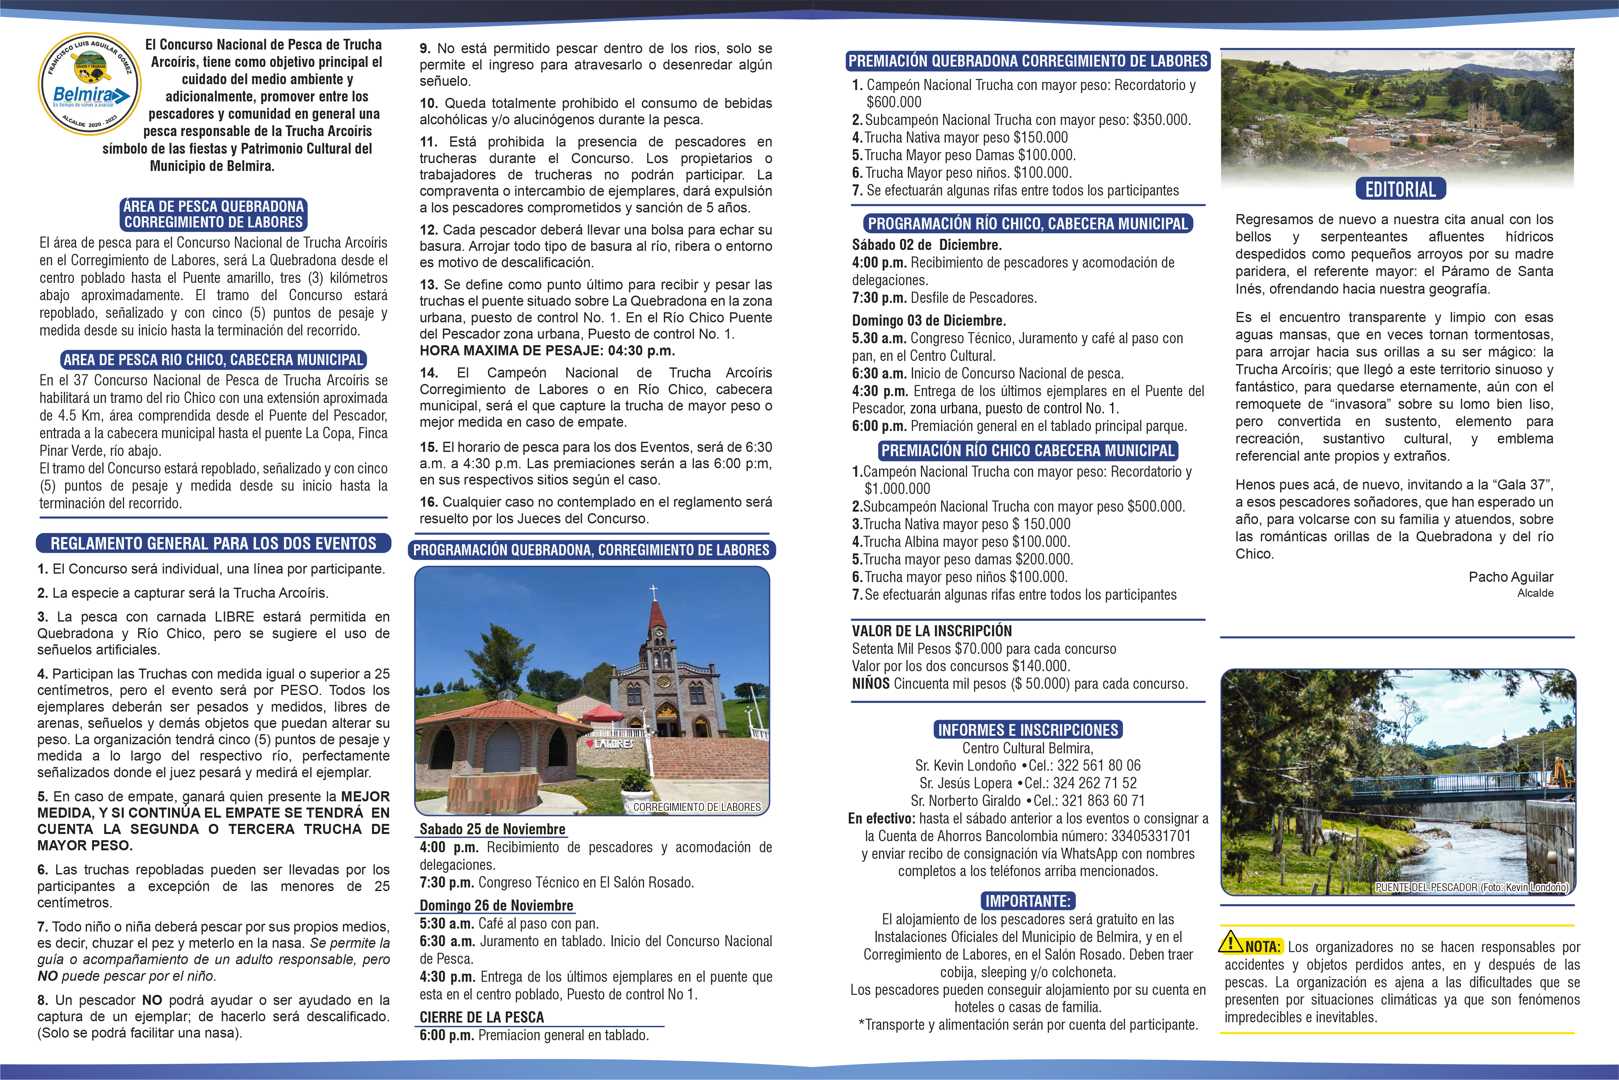 2023 Fiestas de la Trucha - Programación - Belmira Antioquia